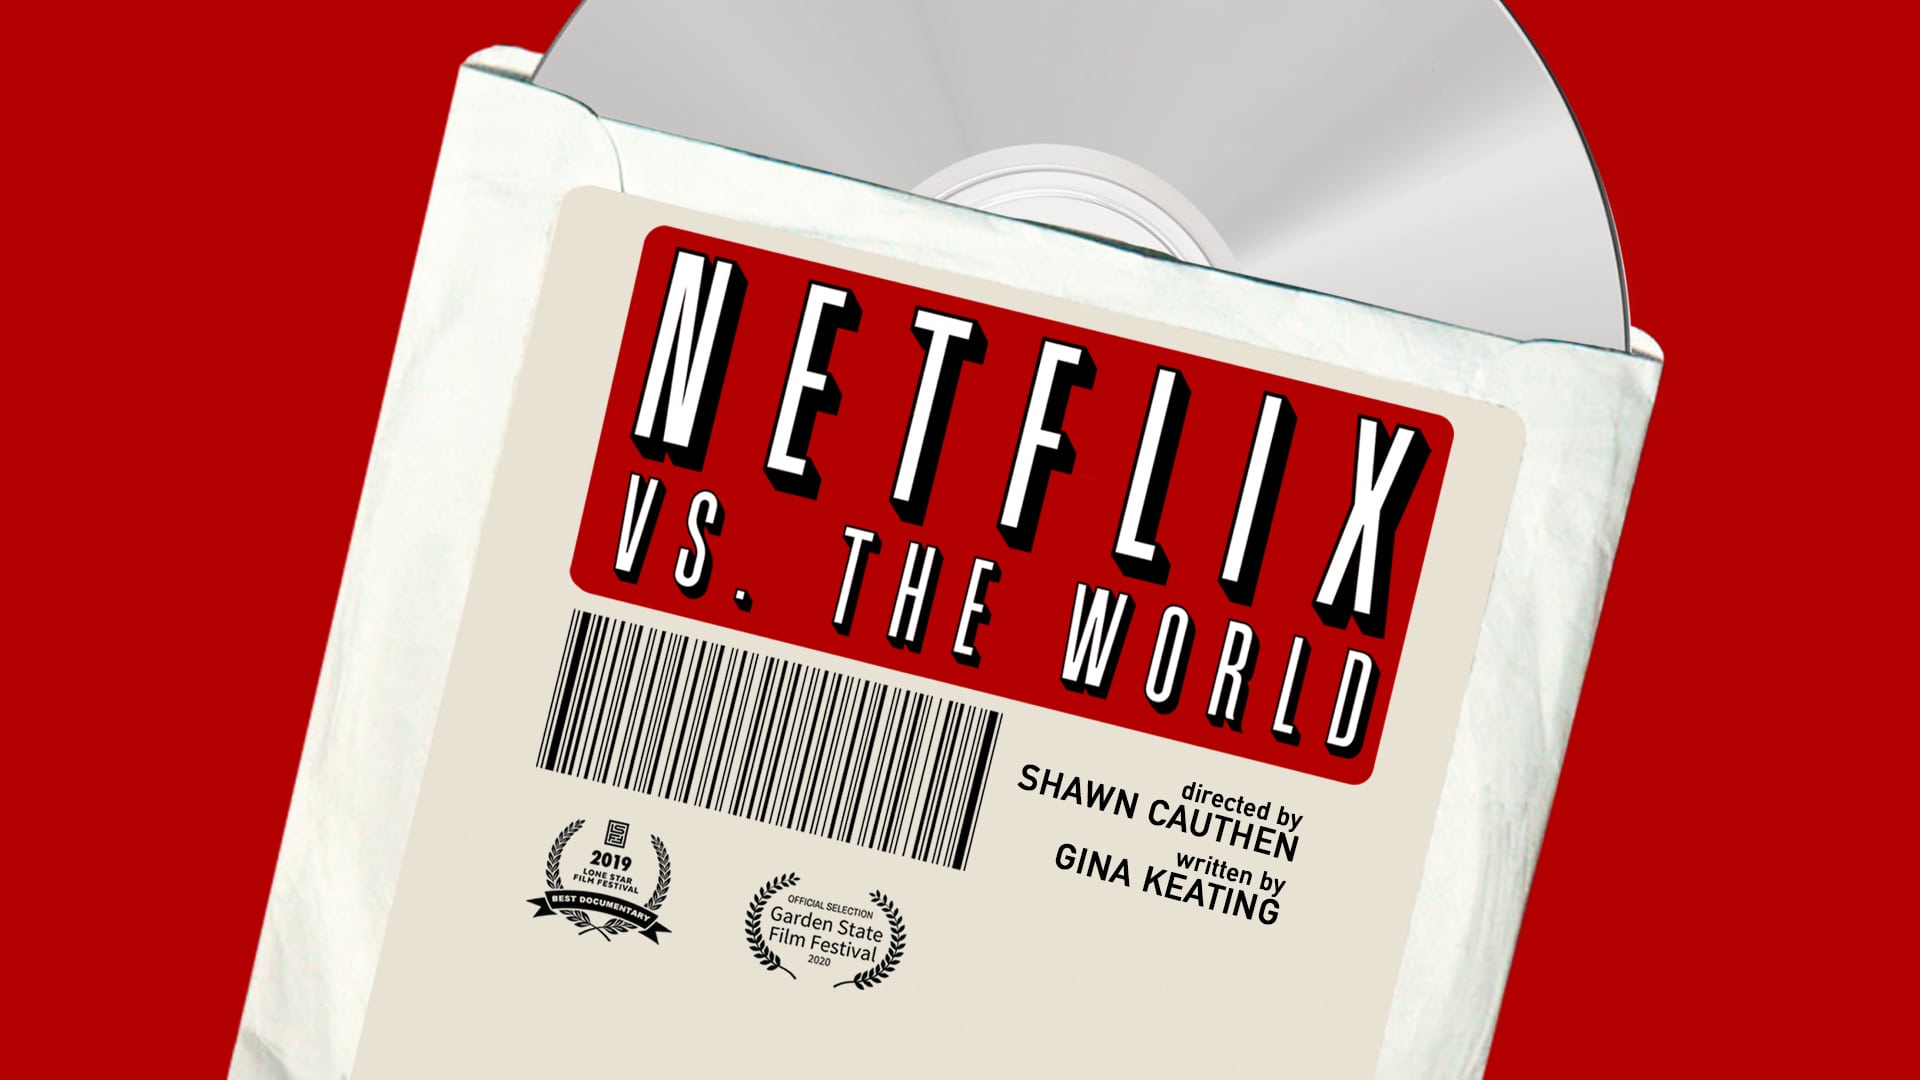 Netflix vs the world review